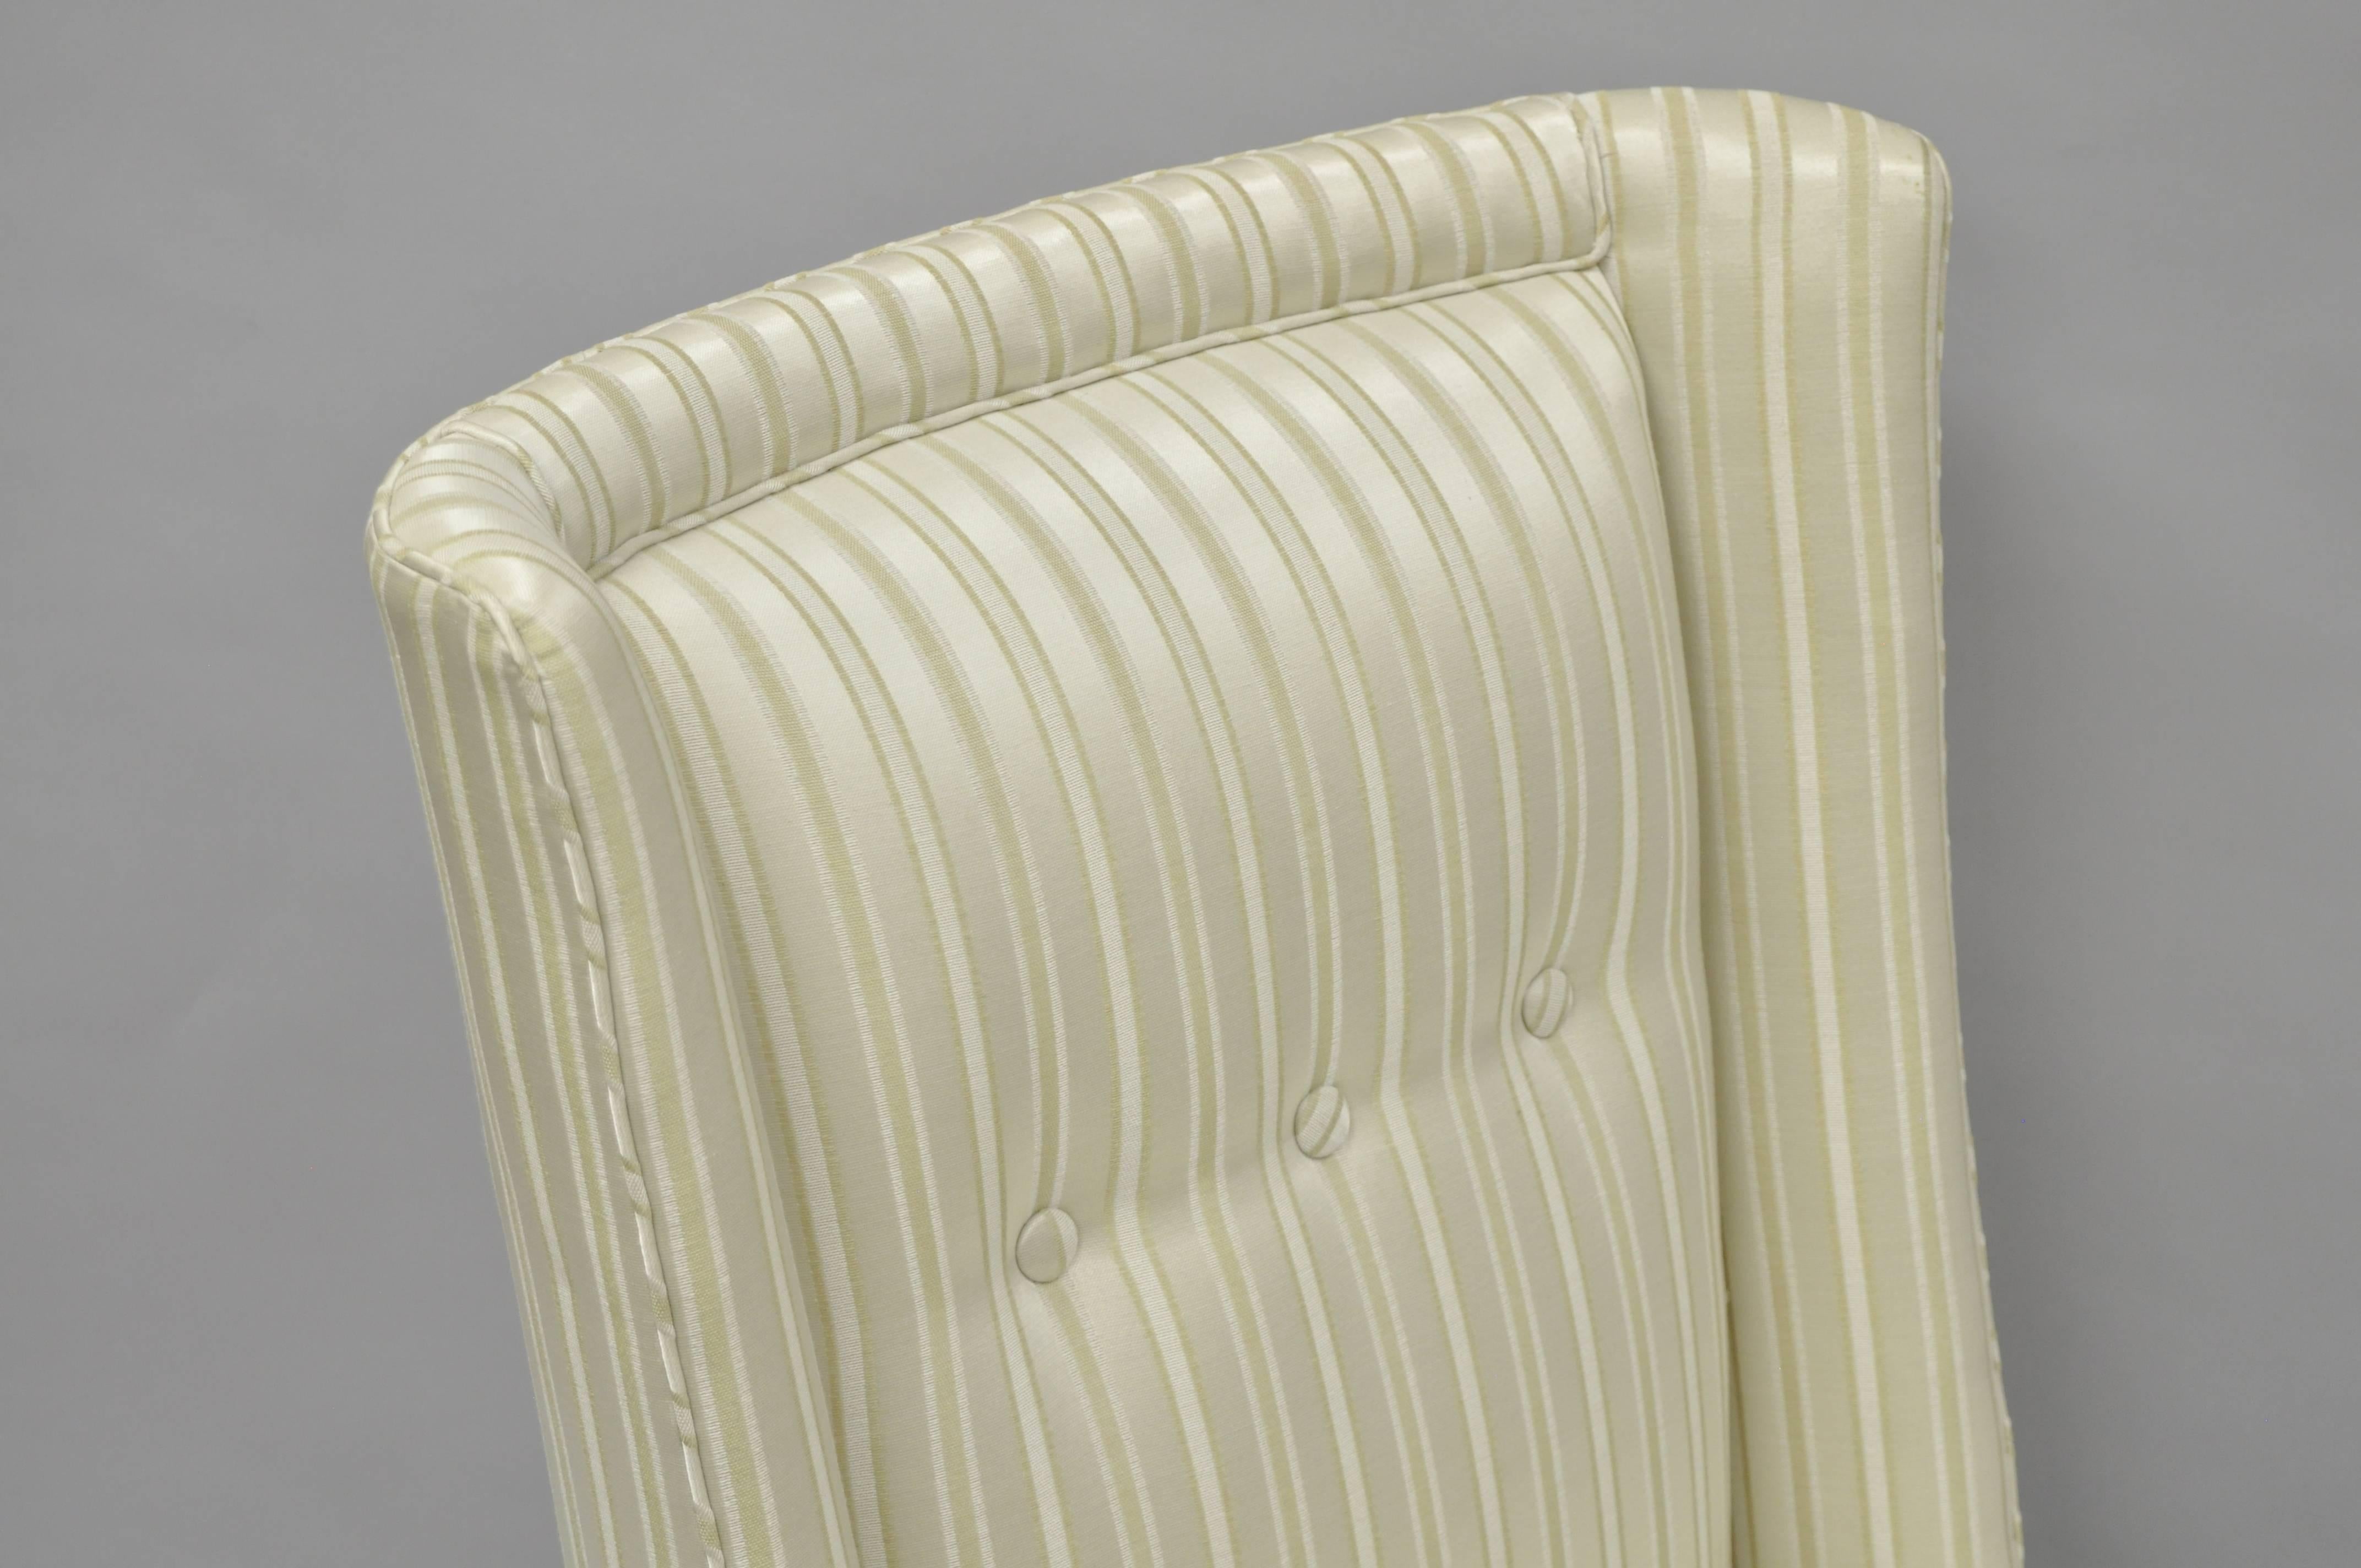 American Paul Laszlo Upholstered Slipper Lounge Chair Barrel Wingback Mid-Century Modern For Sale